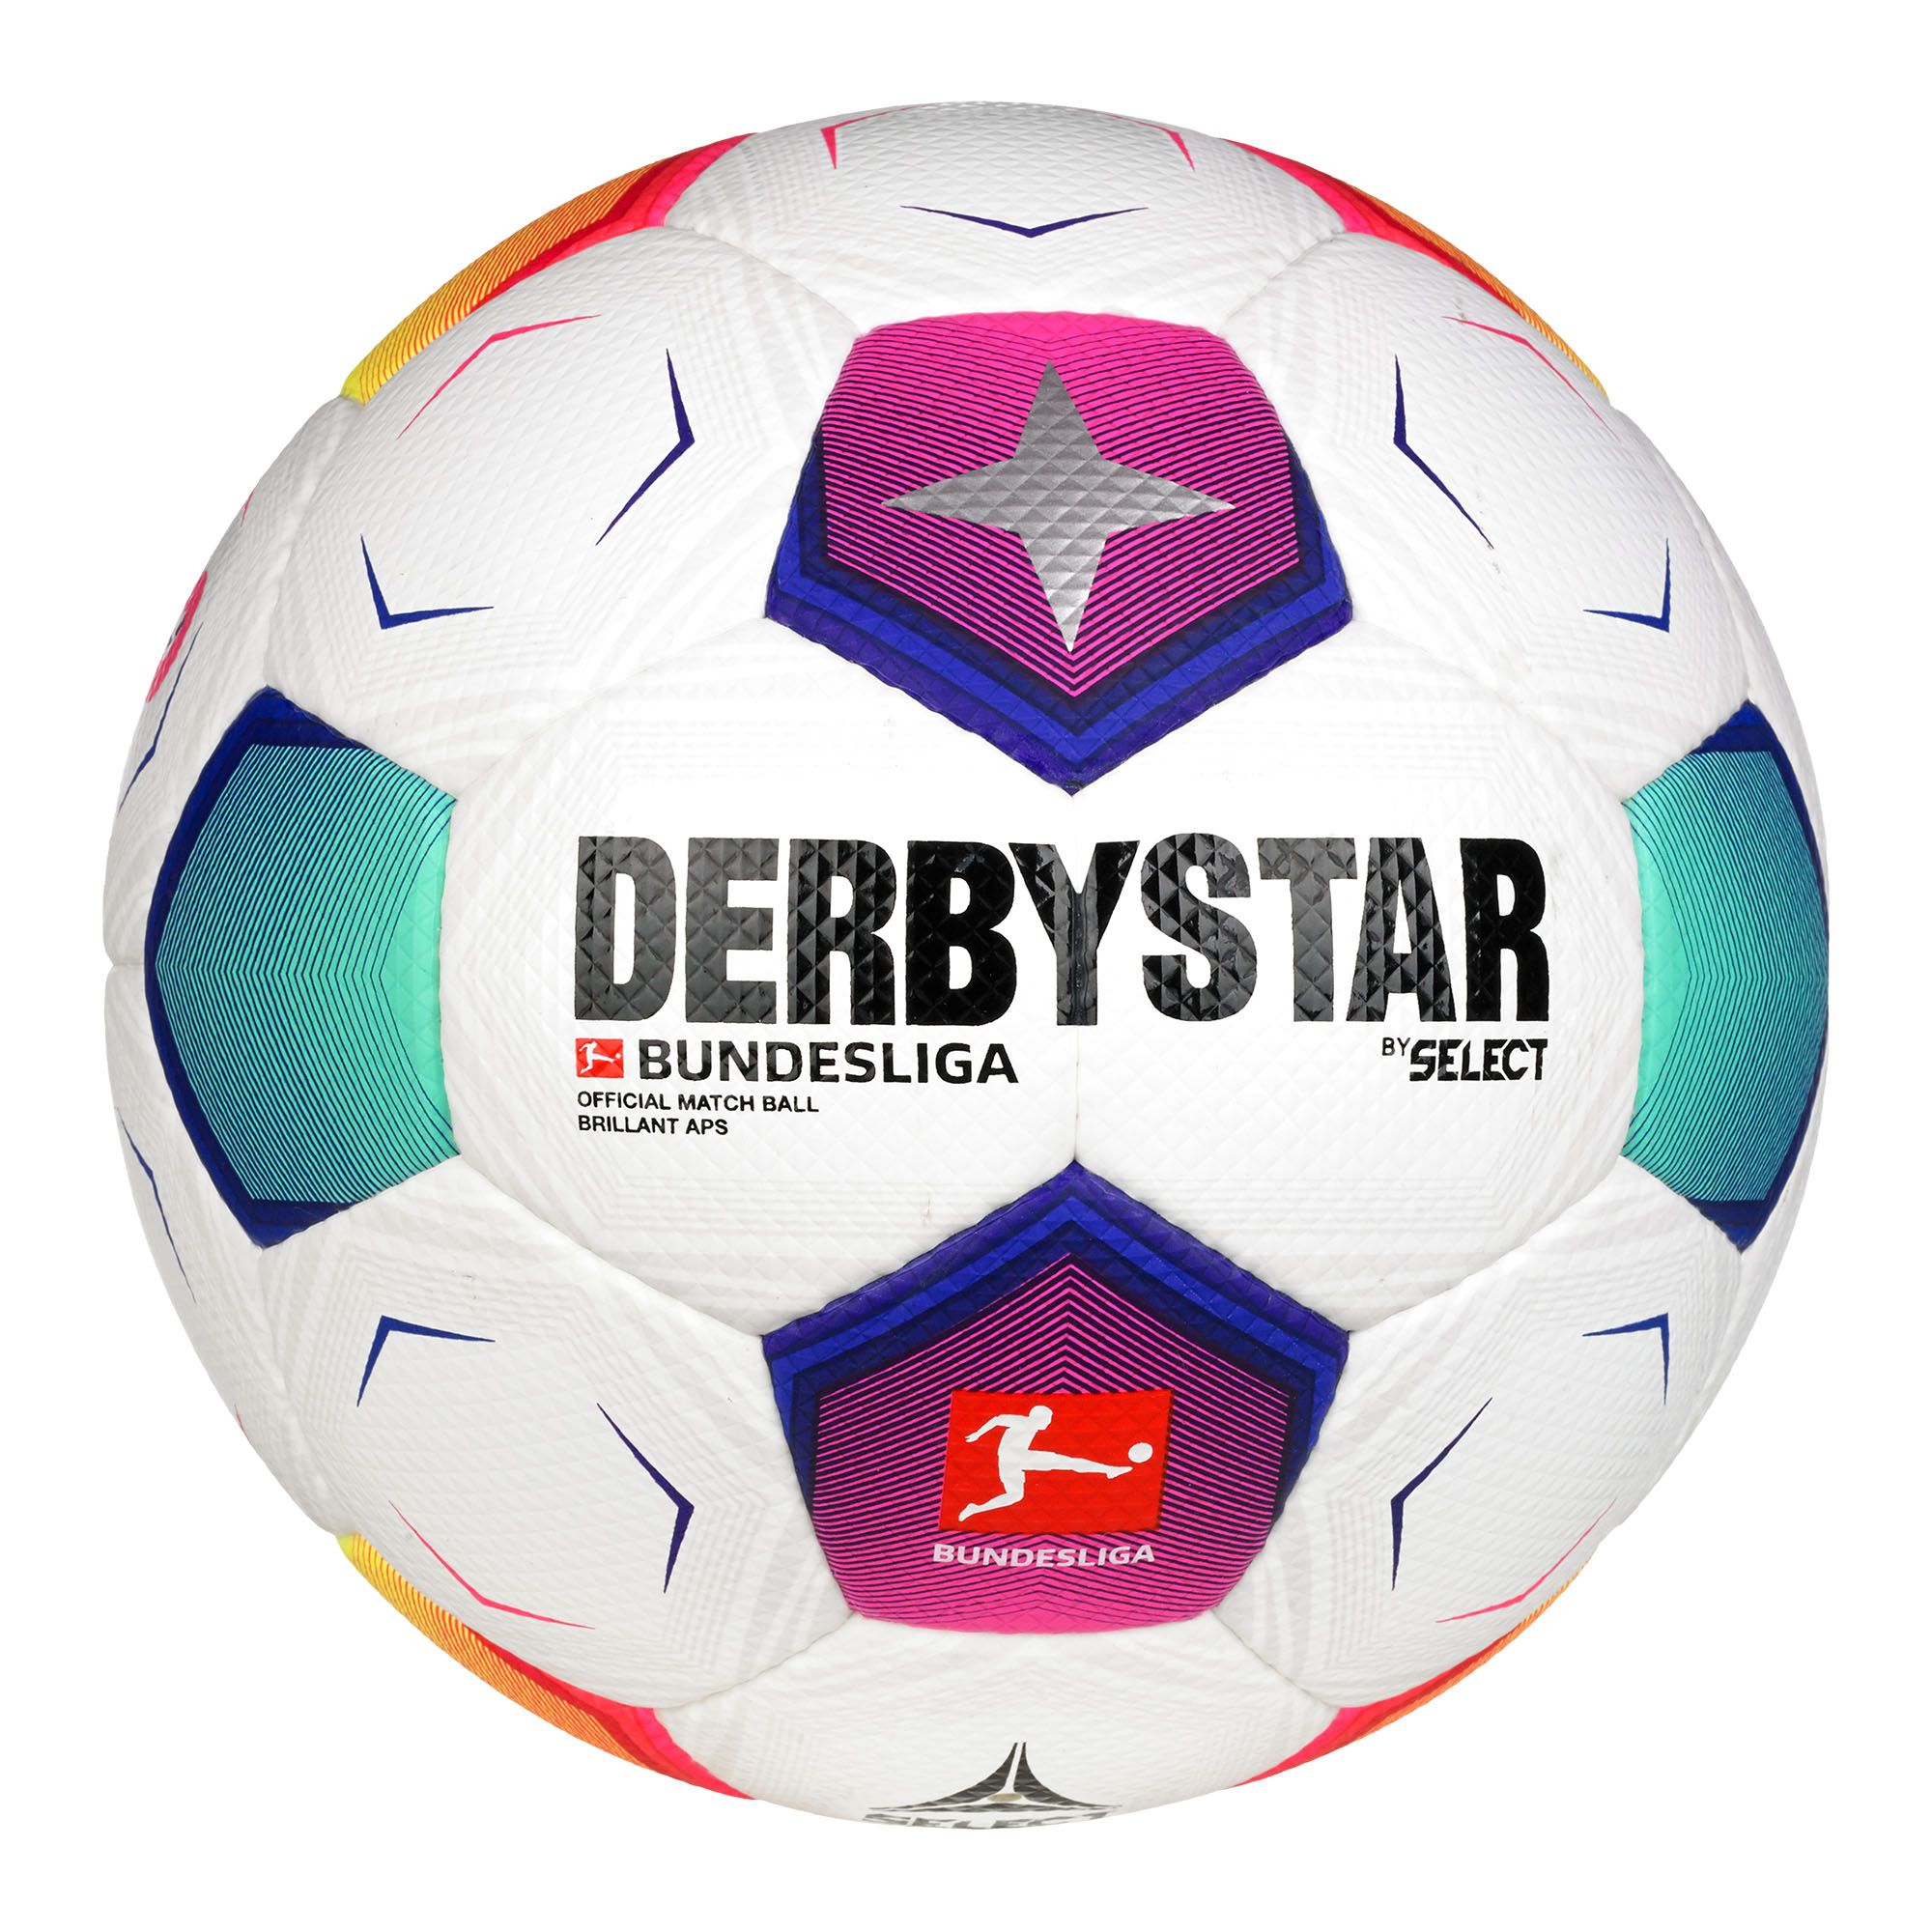 Derbystar Brillant Bundesliga